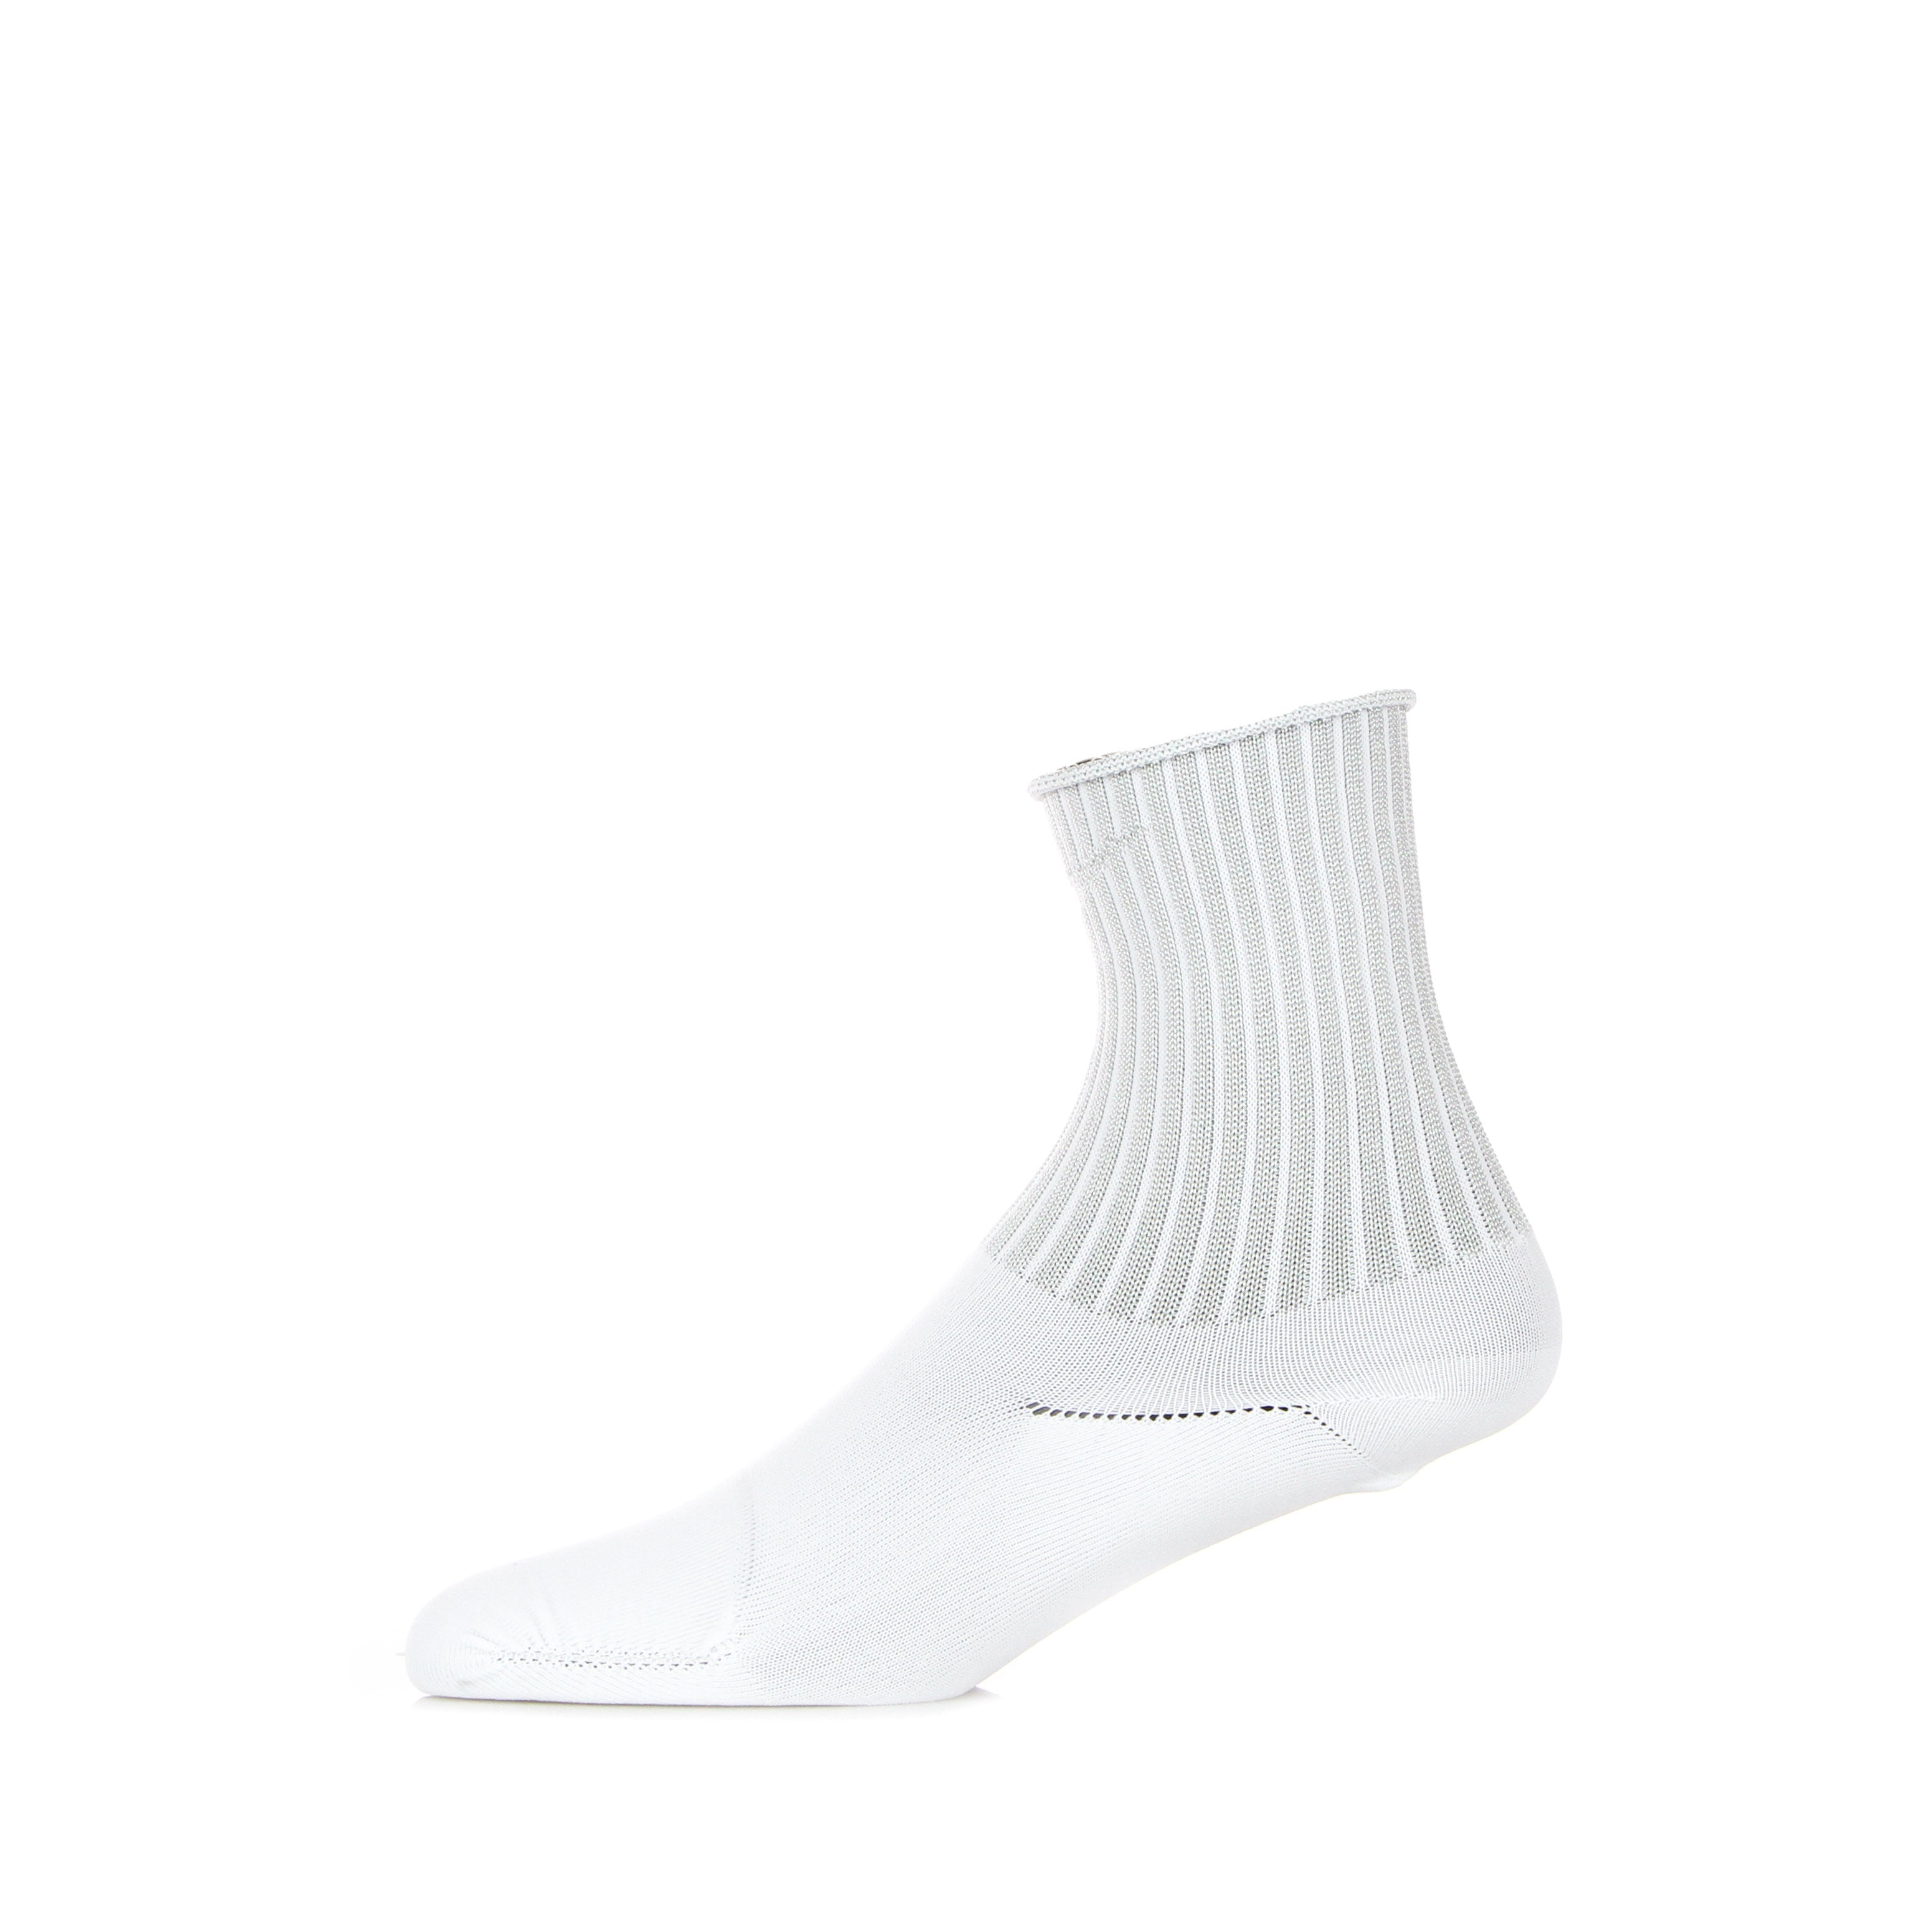 Nike, Calza Bassa Donna W One Ankle Wildcard Socks, White/silver